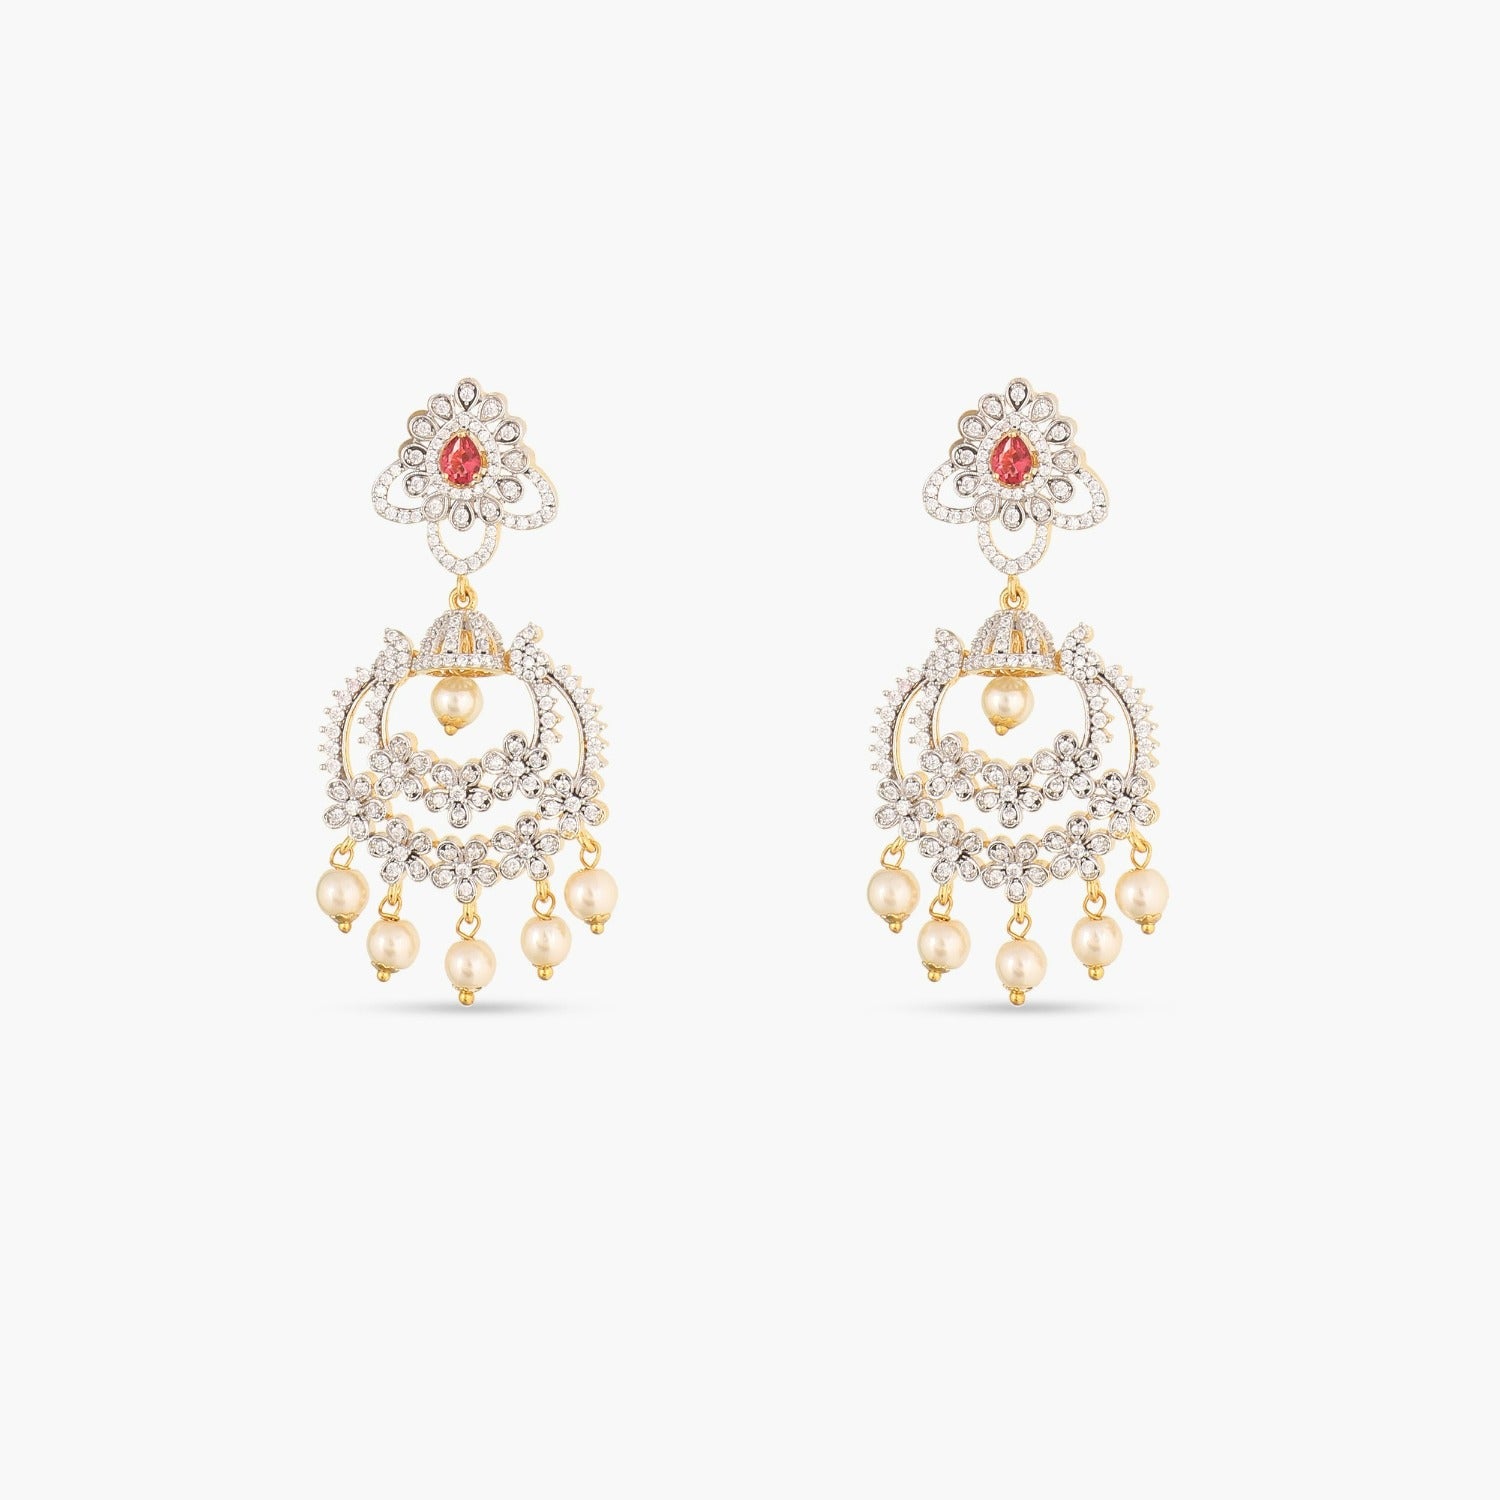 Aggregate 209+ lalitha jewellery diamond earrings